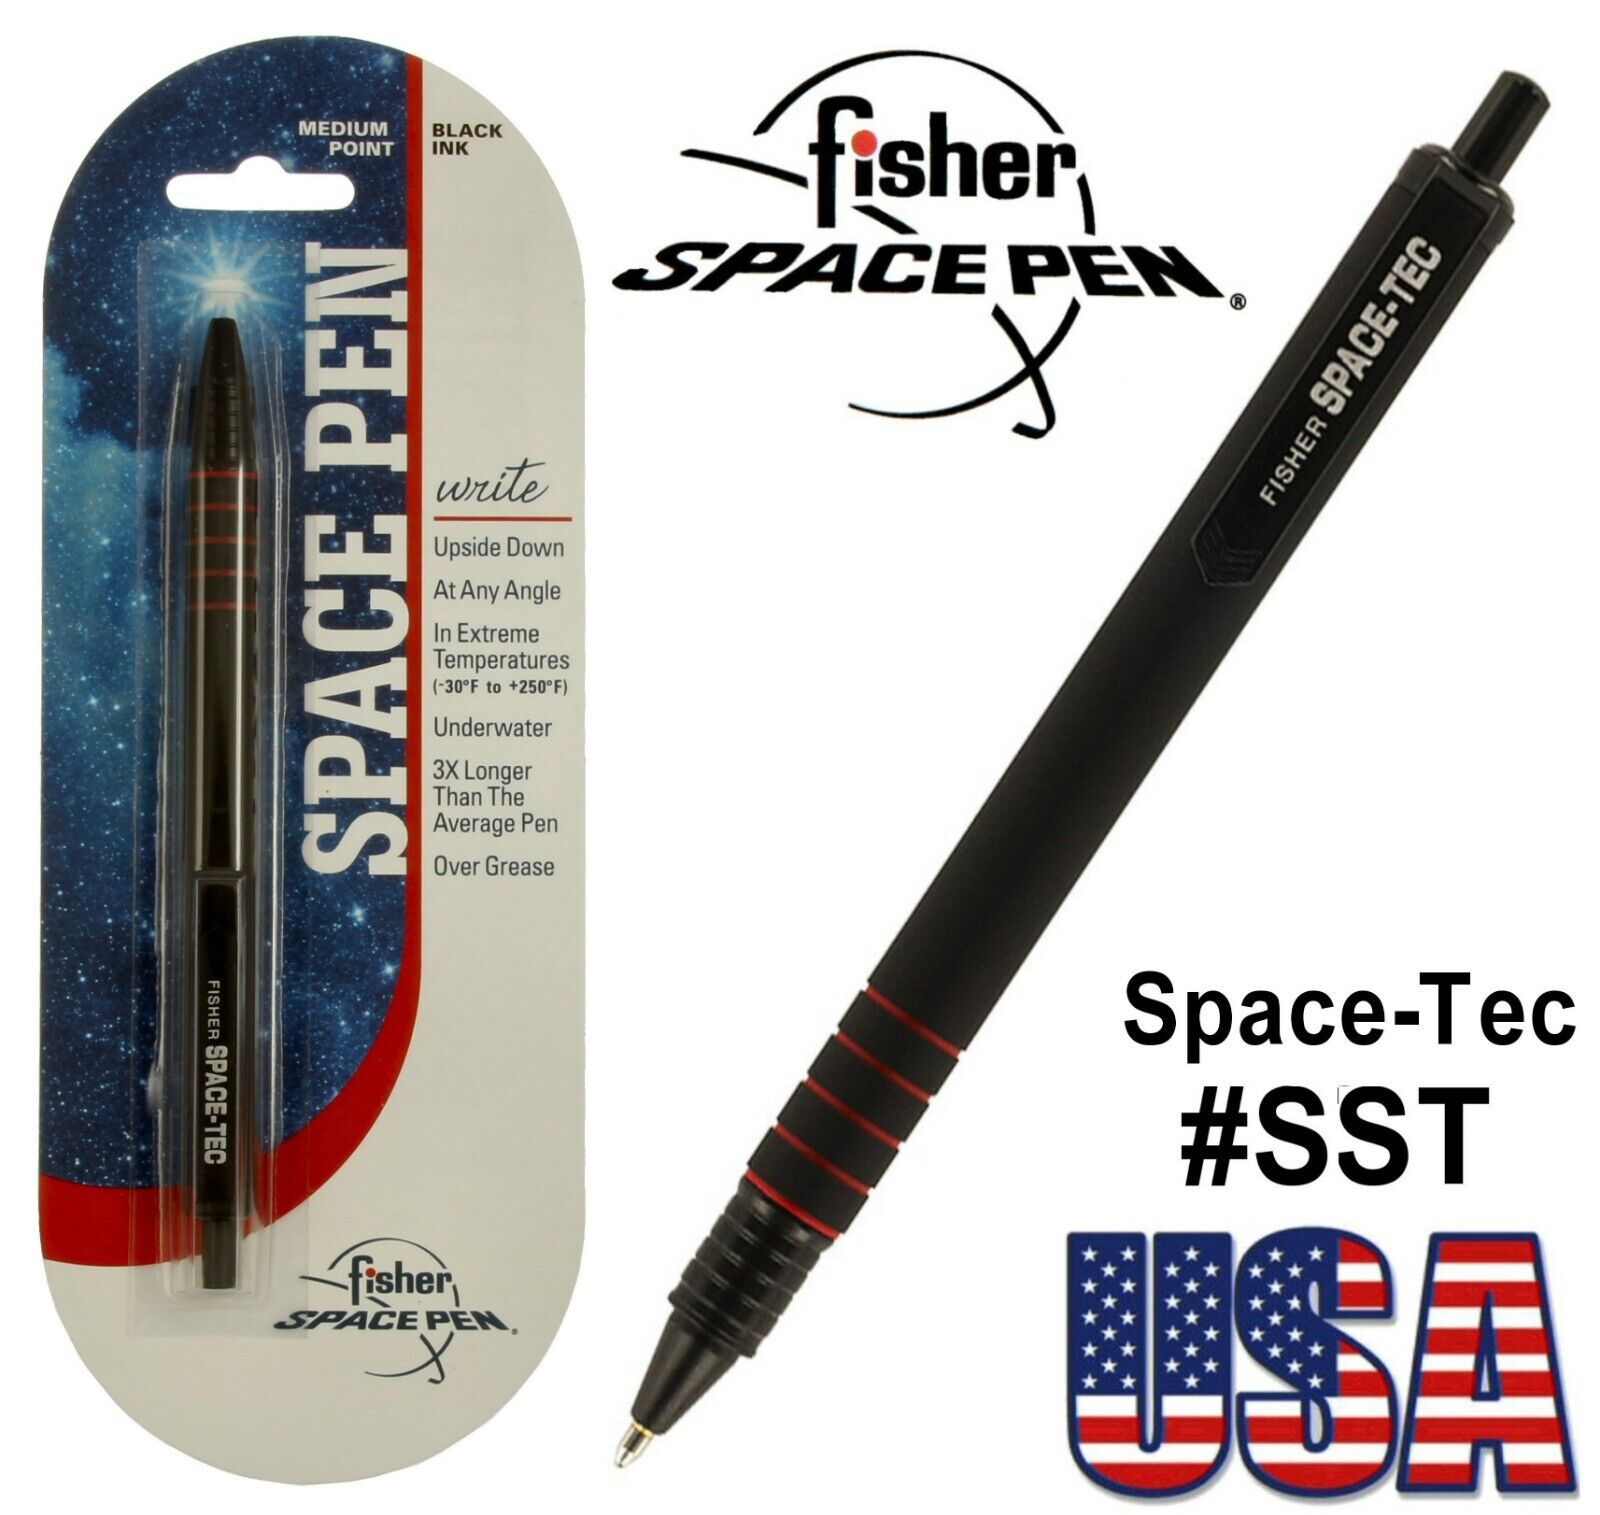 Fisher Zero Gravity Space Pen #SST / Space-Tec Retractable Ballpoint Pen